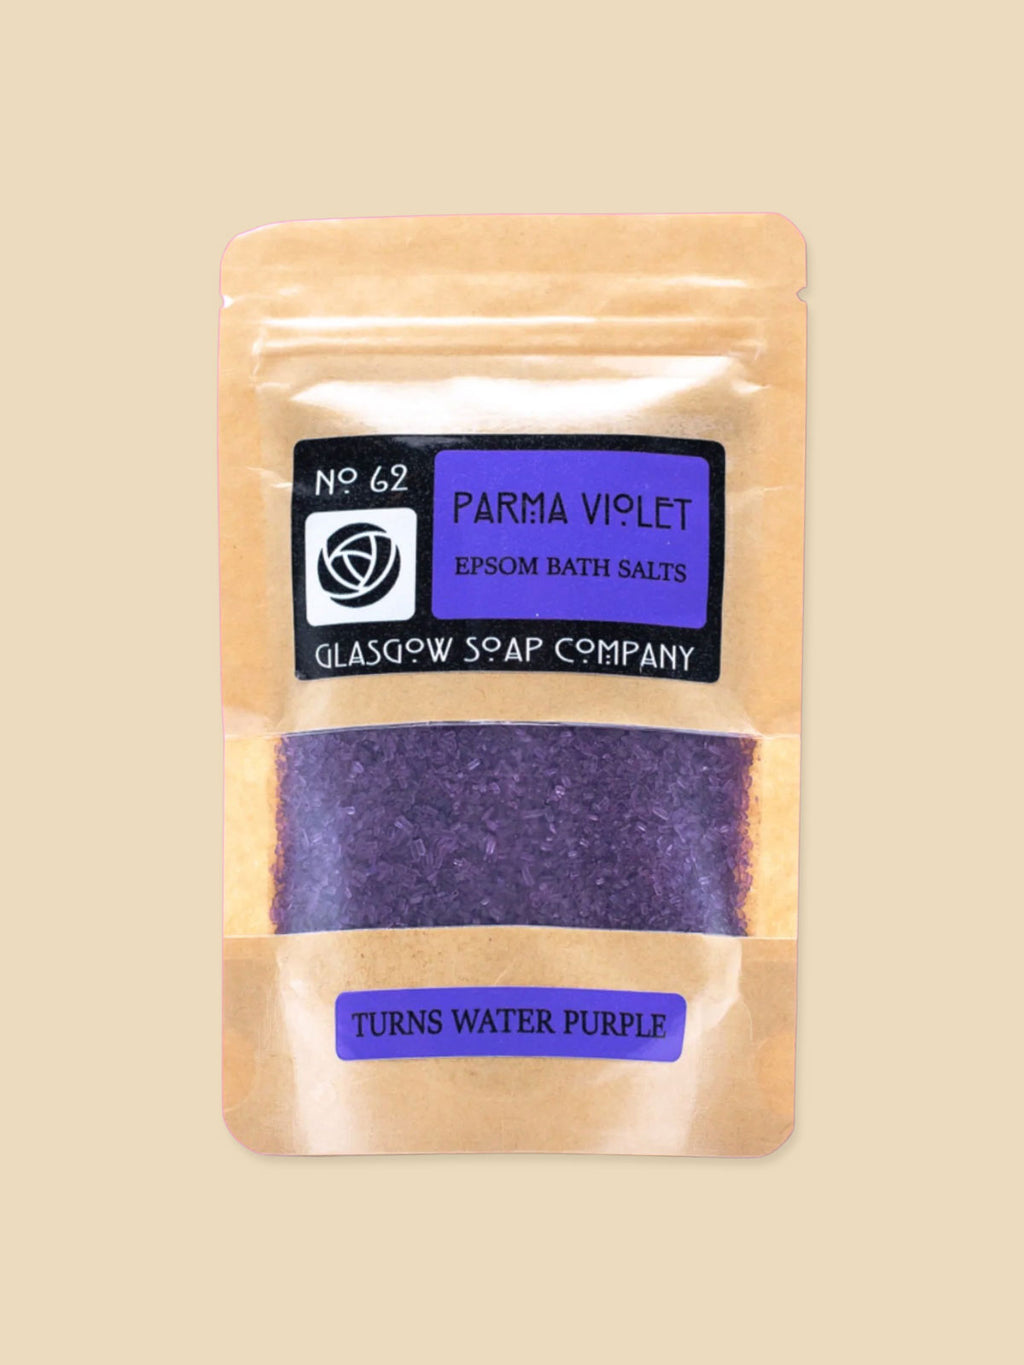 Glasgow Soap Company - Bath Salts - Parma Violets